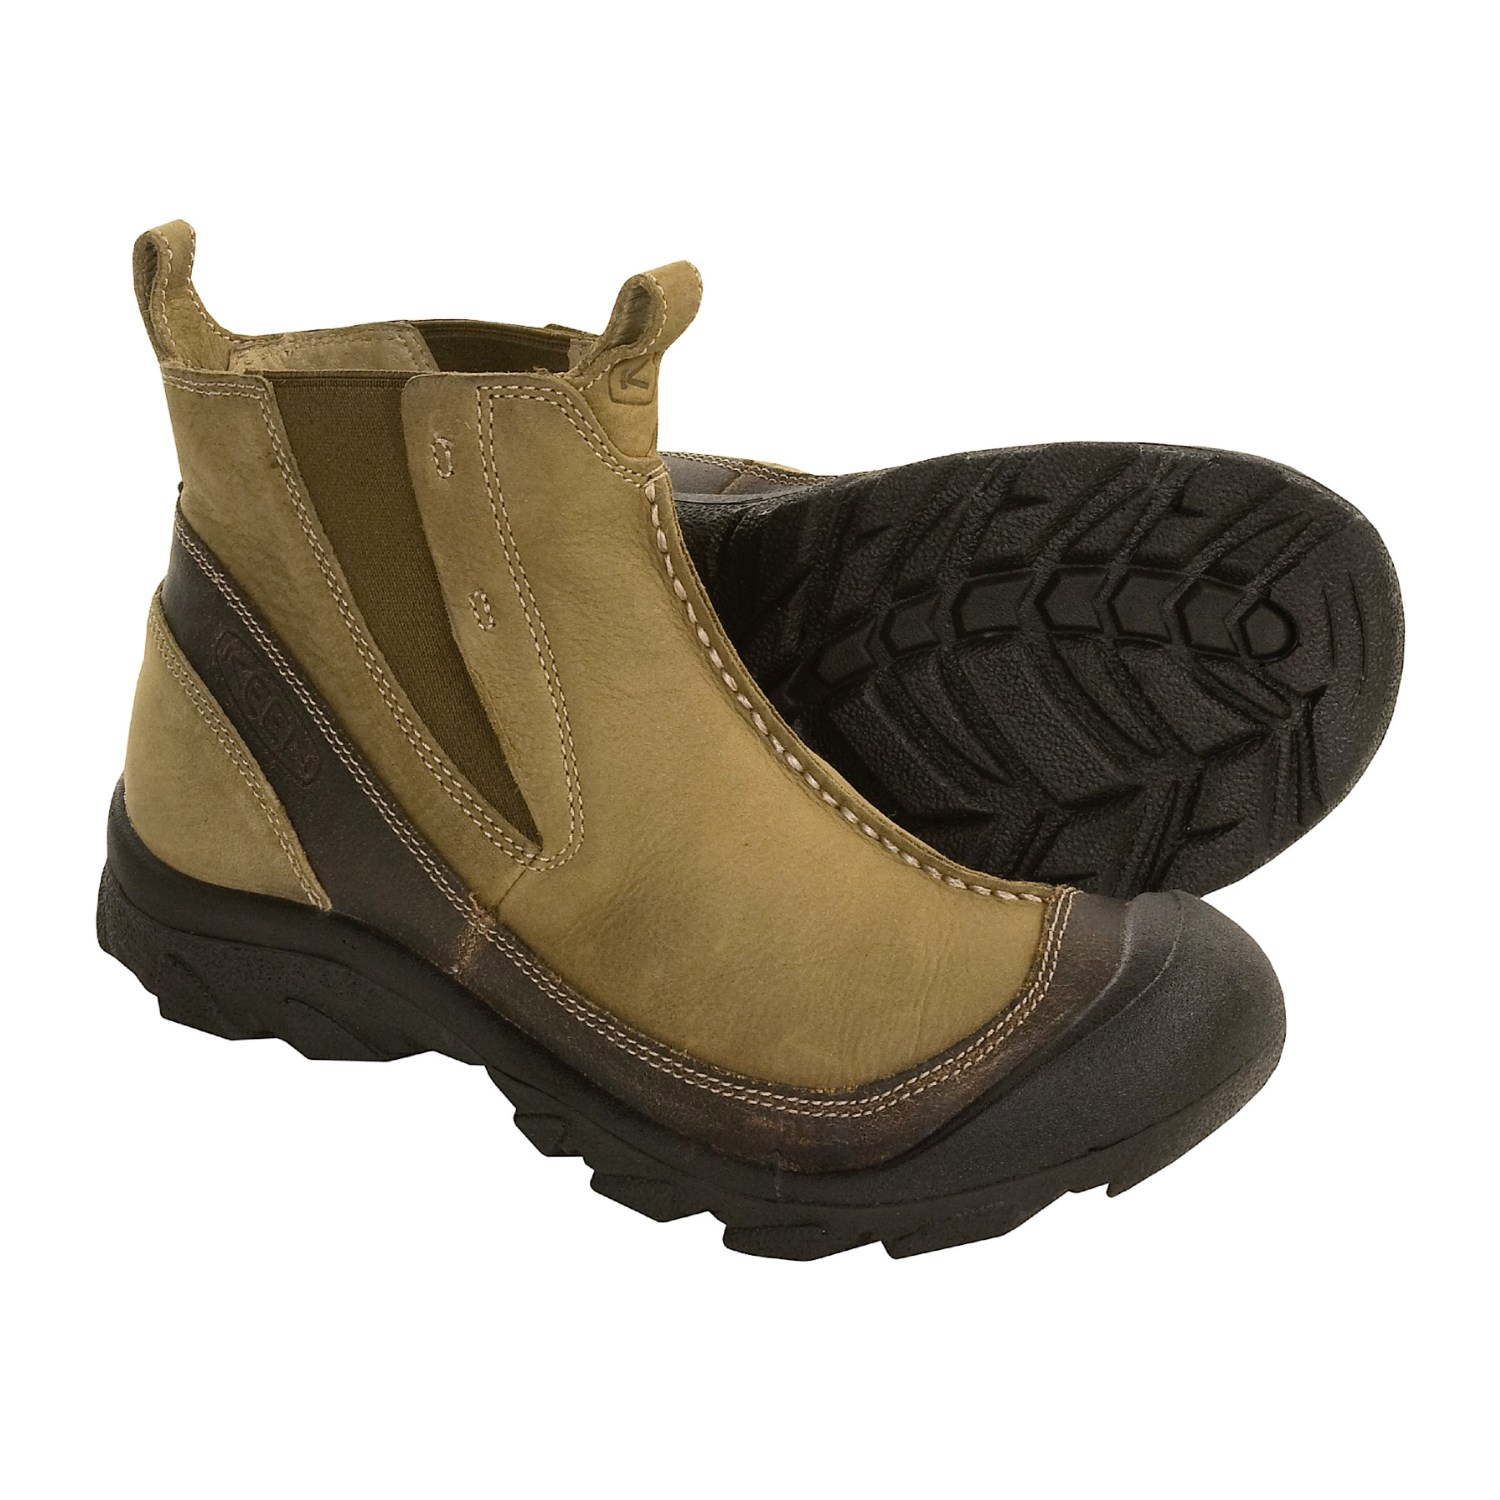 Keen San Antonio Boots (For Men) - Save 36%